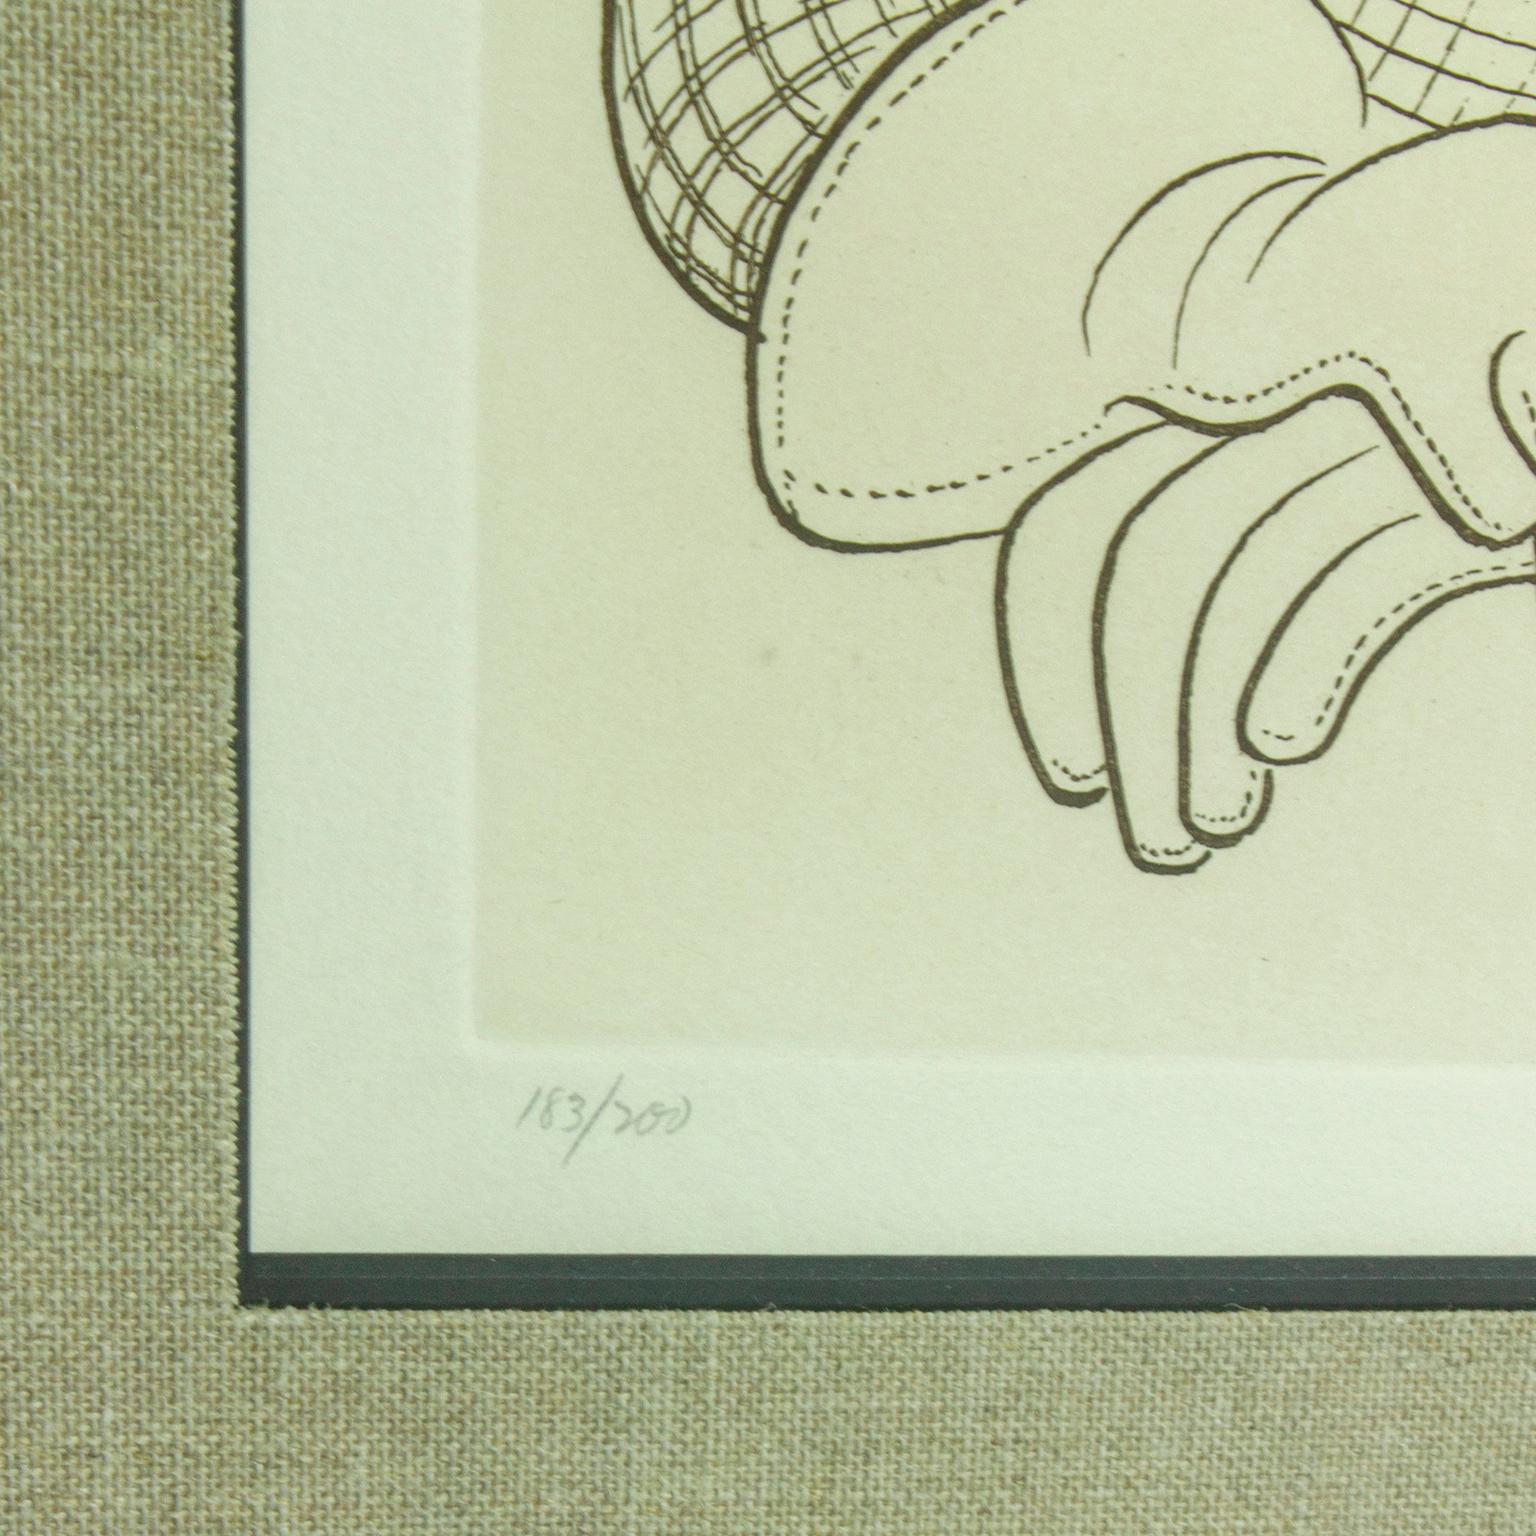 Gravure originale de 1982 « John Wayne » par Al Hirschfeld. Signé et numéroté à la main. - Print de Albert Al Hirschfeld